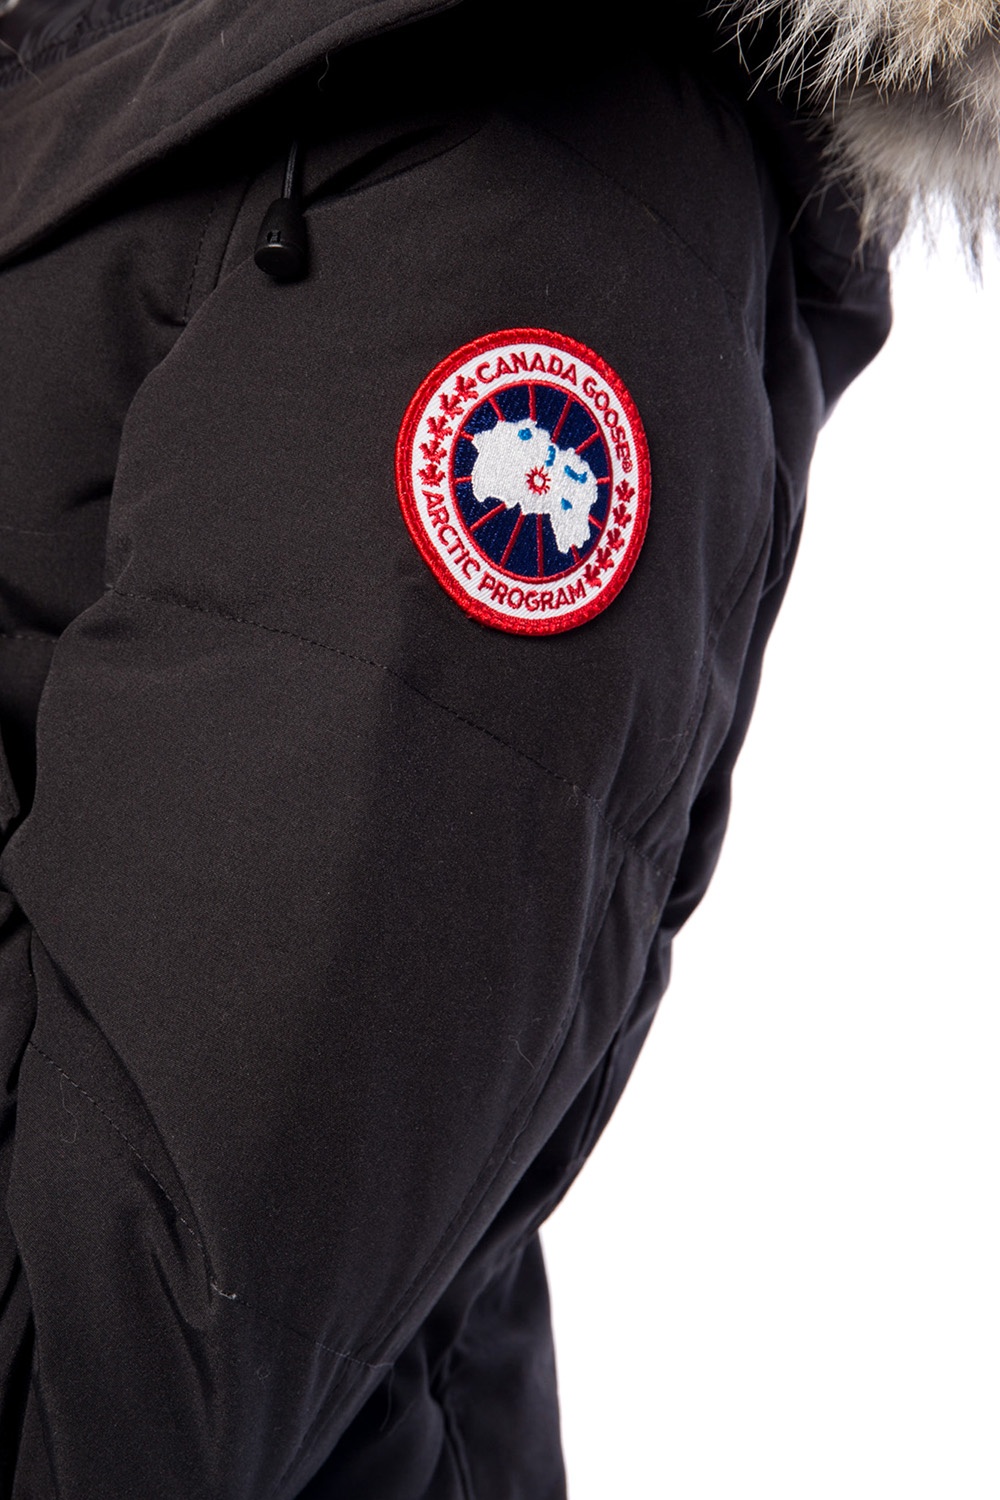 Canada Goose ‘Shelburne’ logo-patched jacket